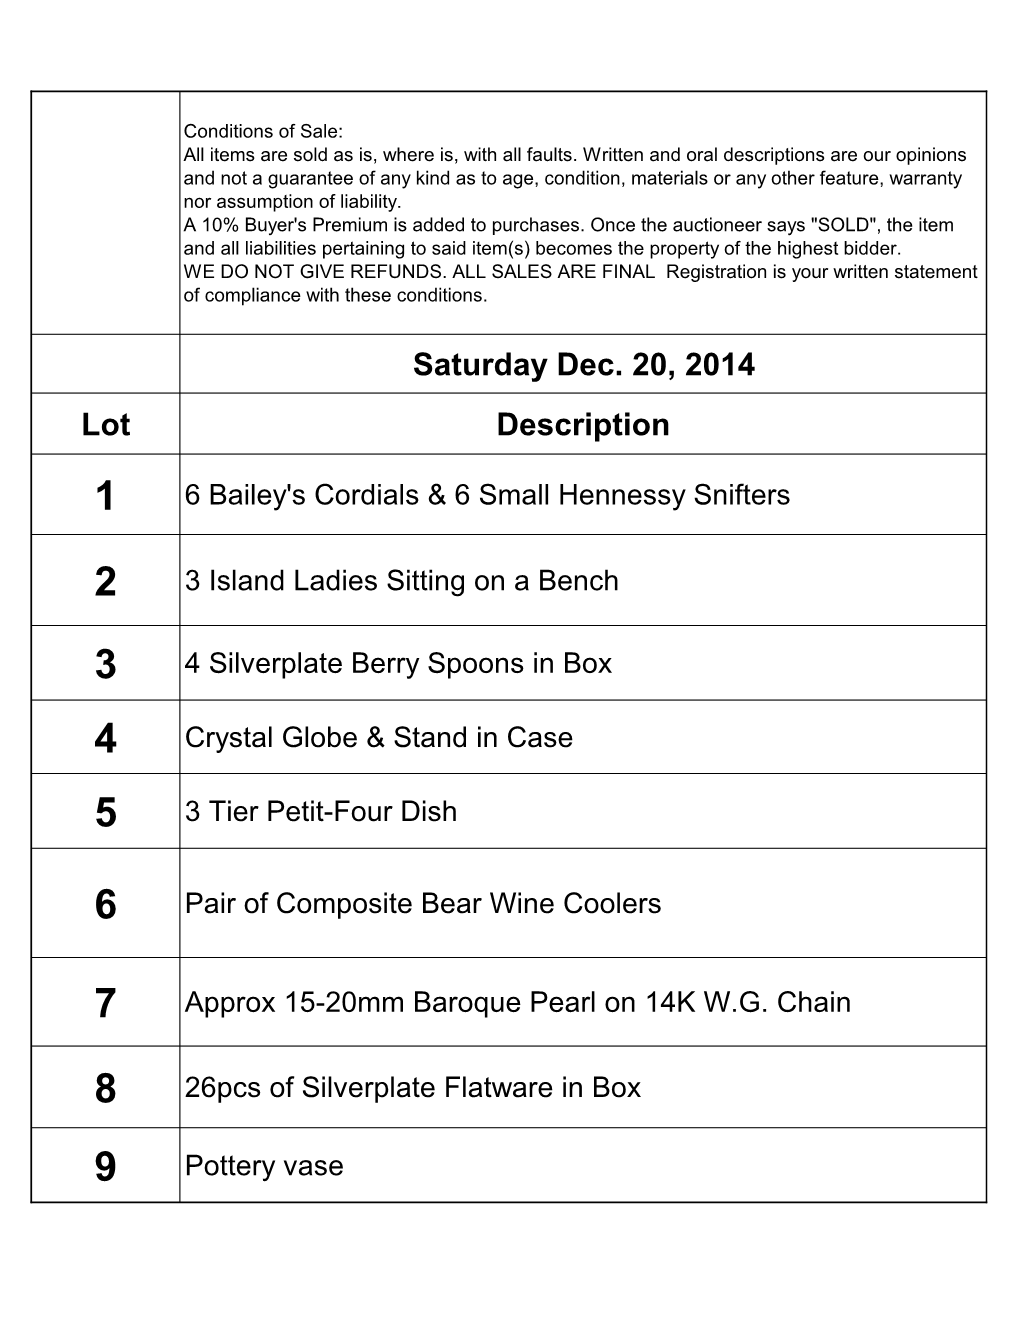 Saturday Dec. 20, 2014 Lot Description 1 6 Bailey's Cordials & 6 Small Hennessy Snifters